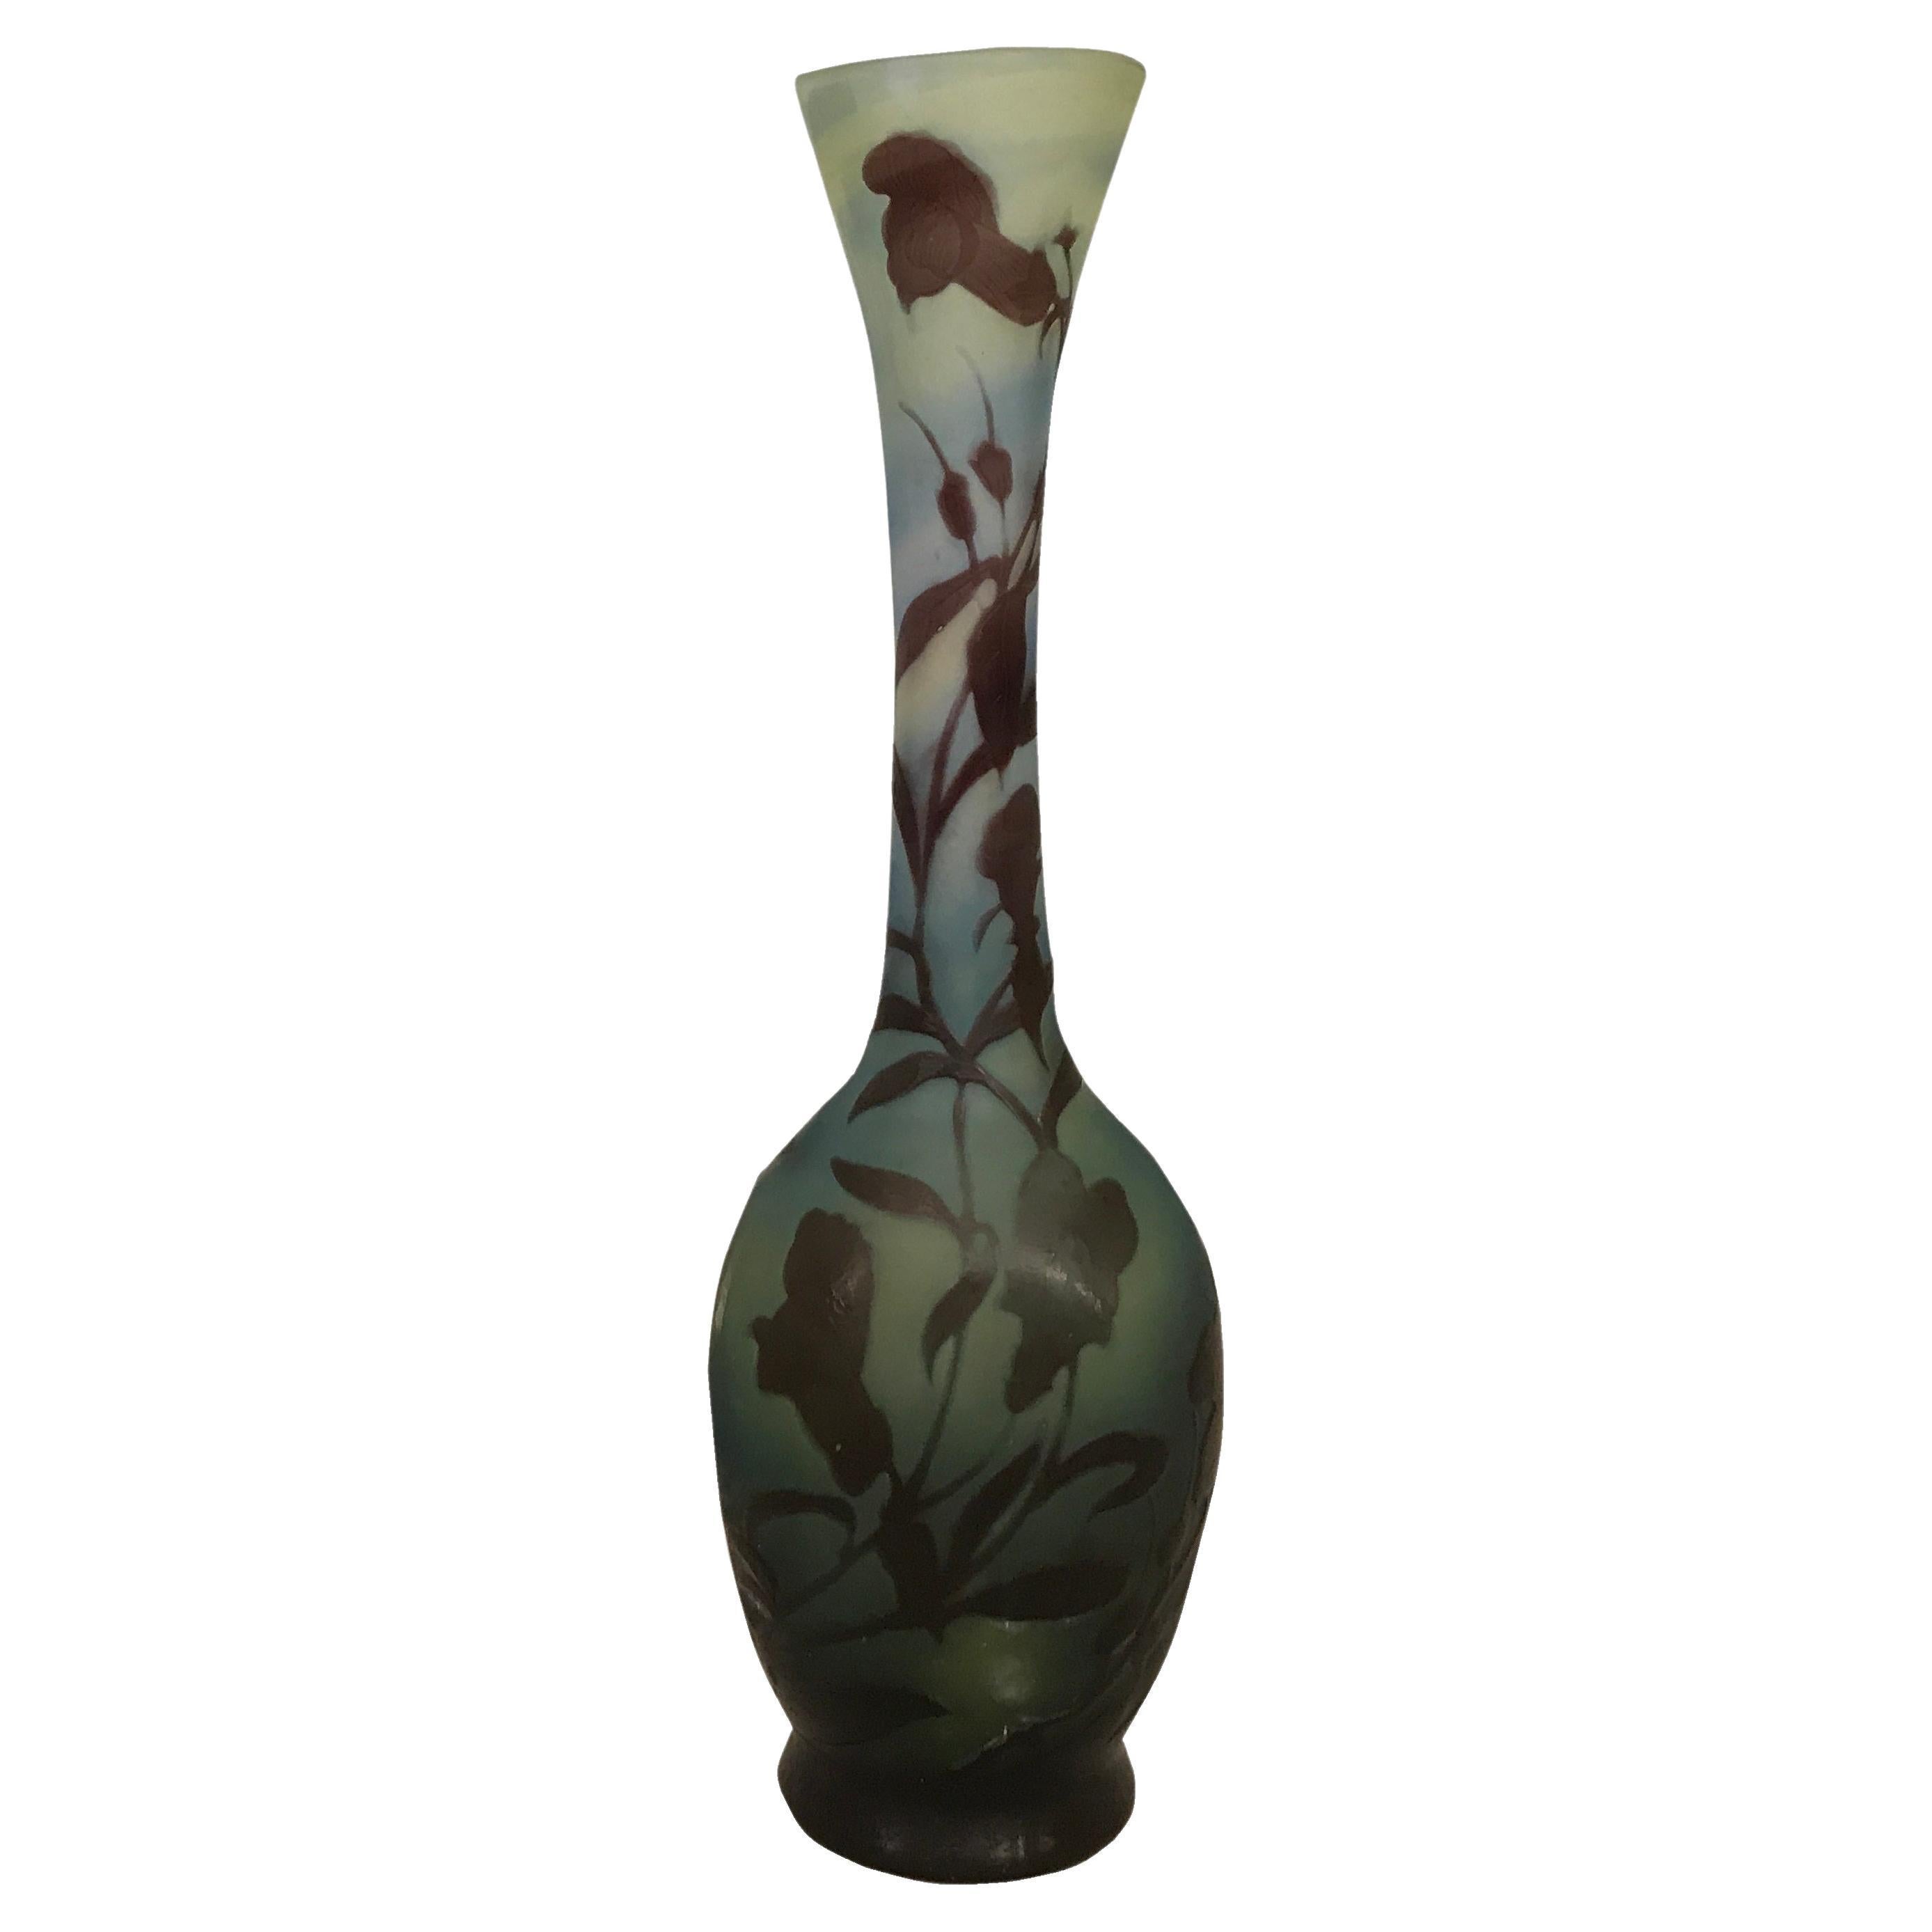  Französische Vase, Zeichen: Gallé, Stil: Jugendstil, Art Nouveau, Liberty